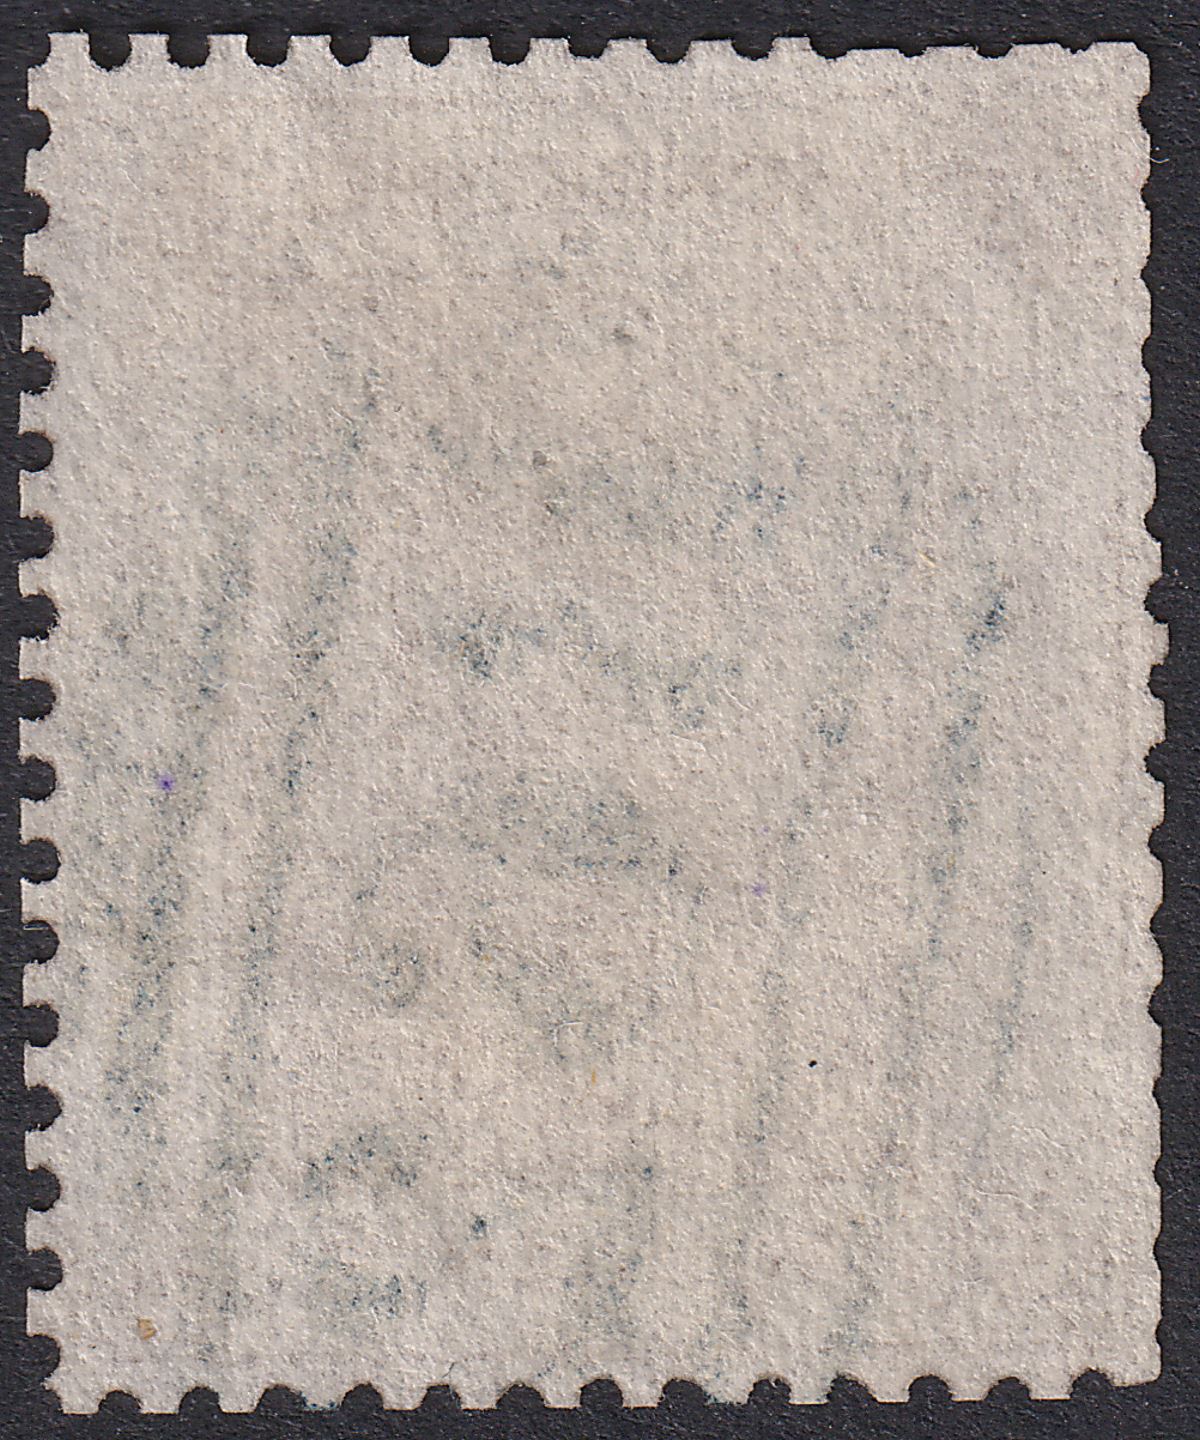 Hong Kong 1863 QV 2c Deep Brown Used SG1a cat £170 with Dark Blue B62 Postmark